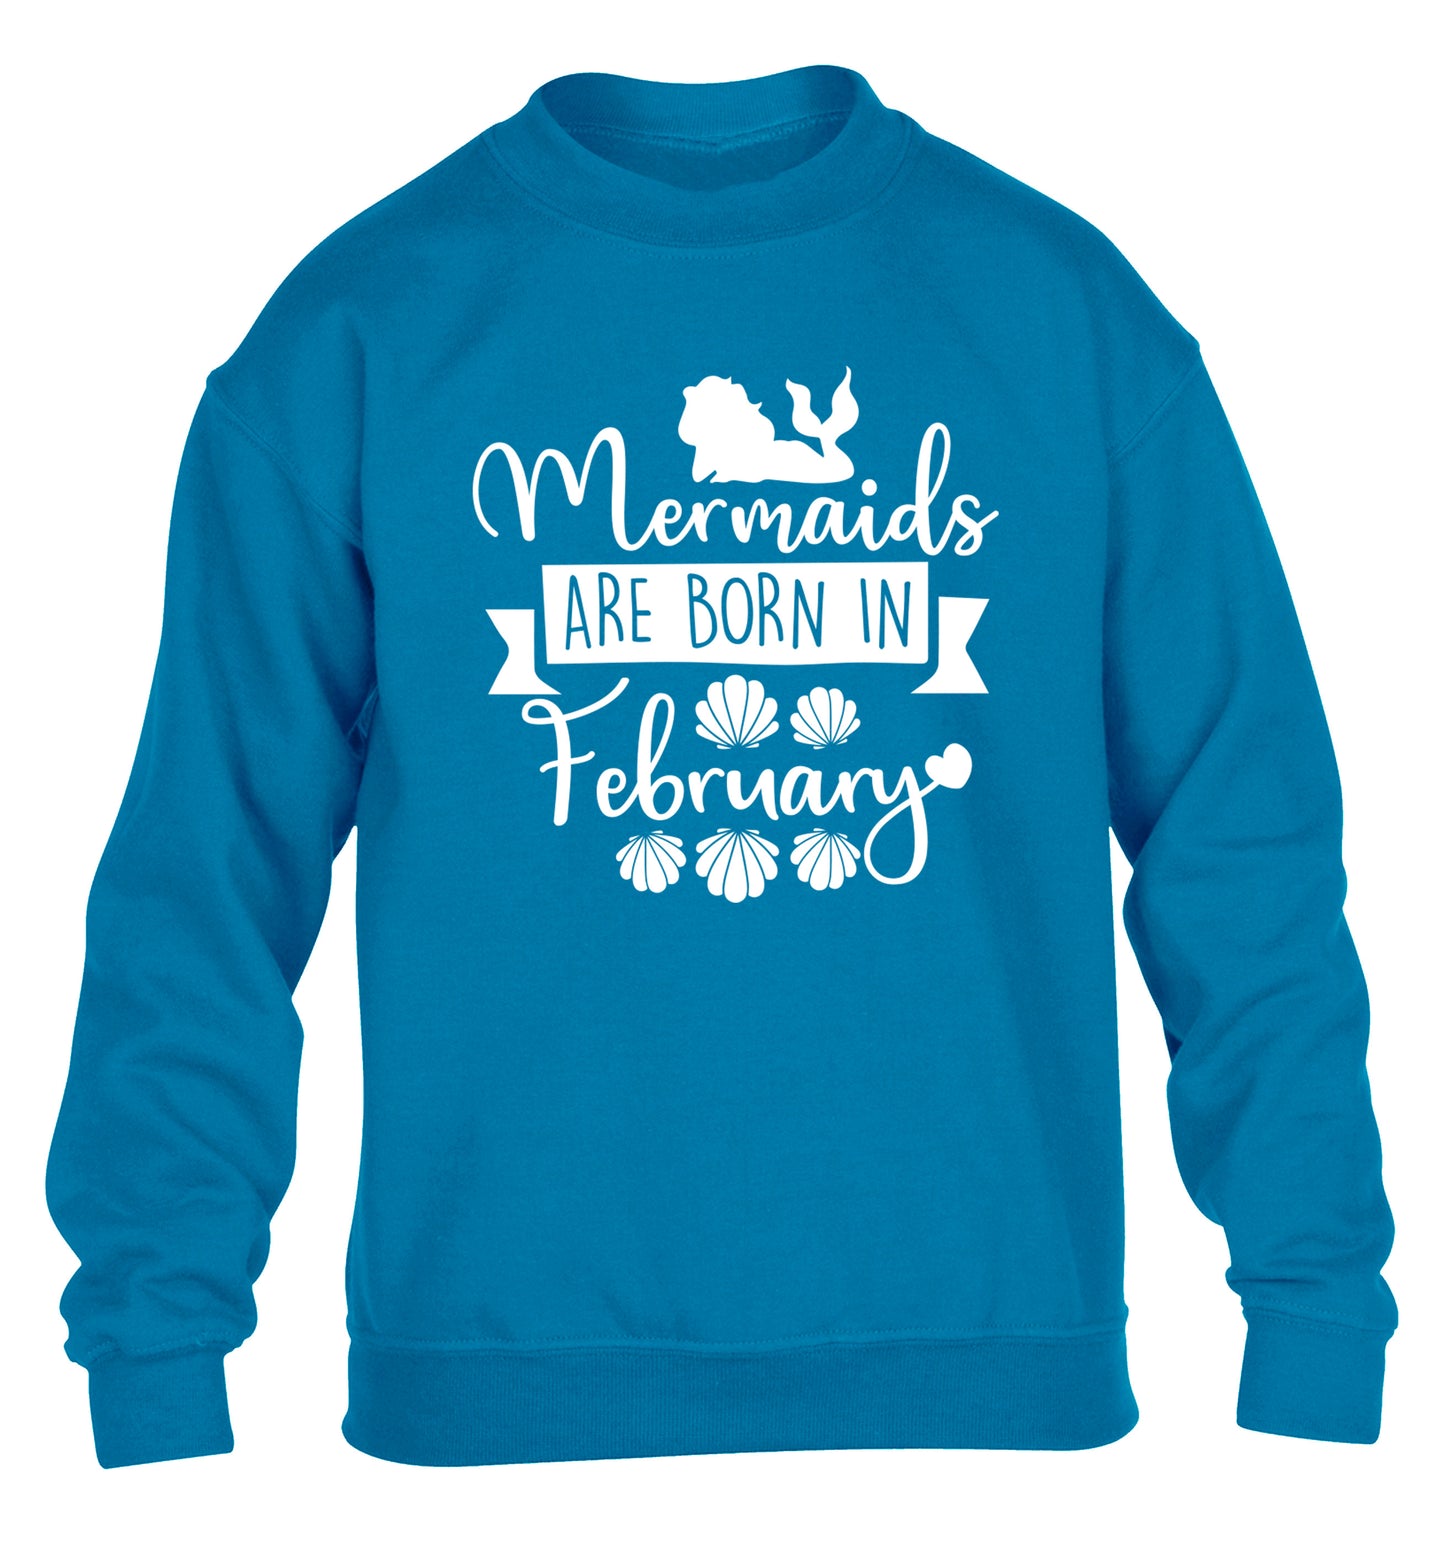 Mermaids are born in February children's blue sweater 12-13 Years